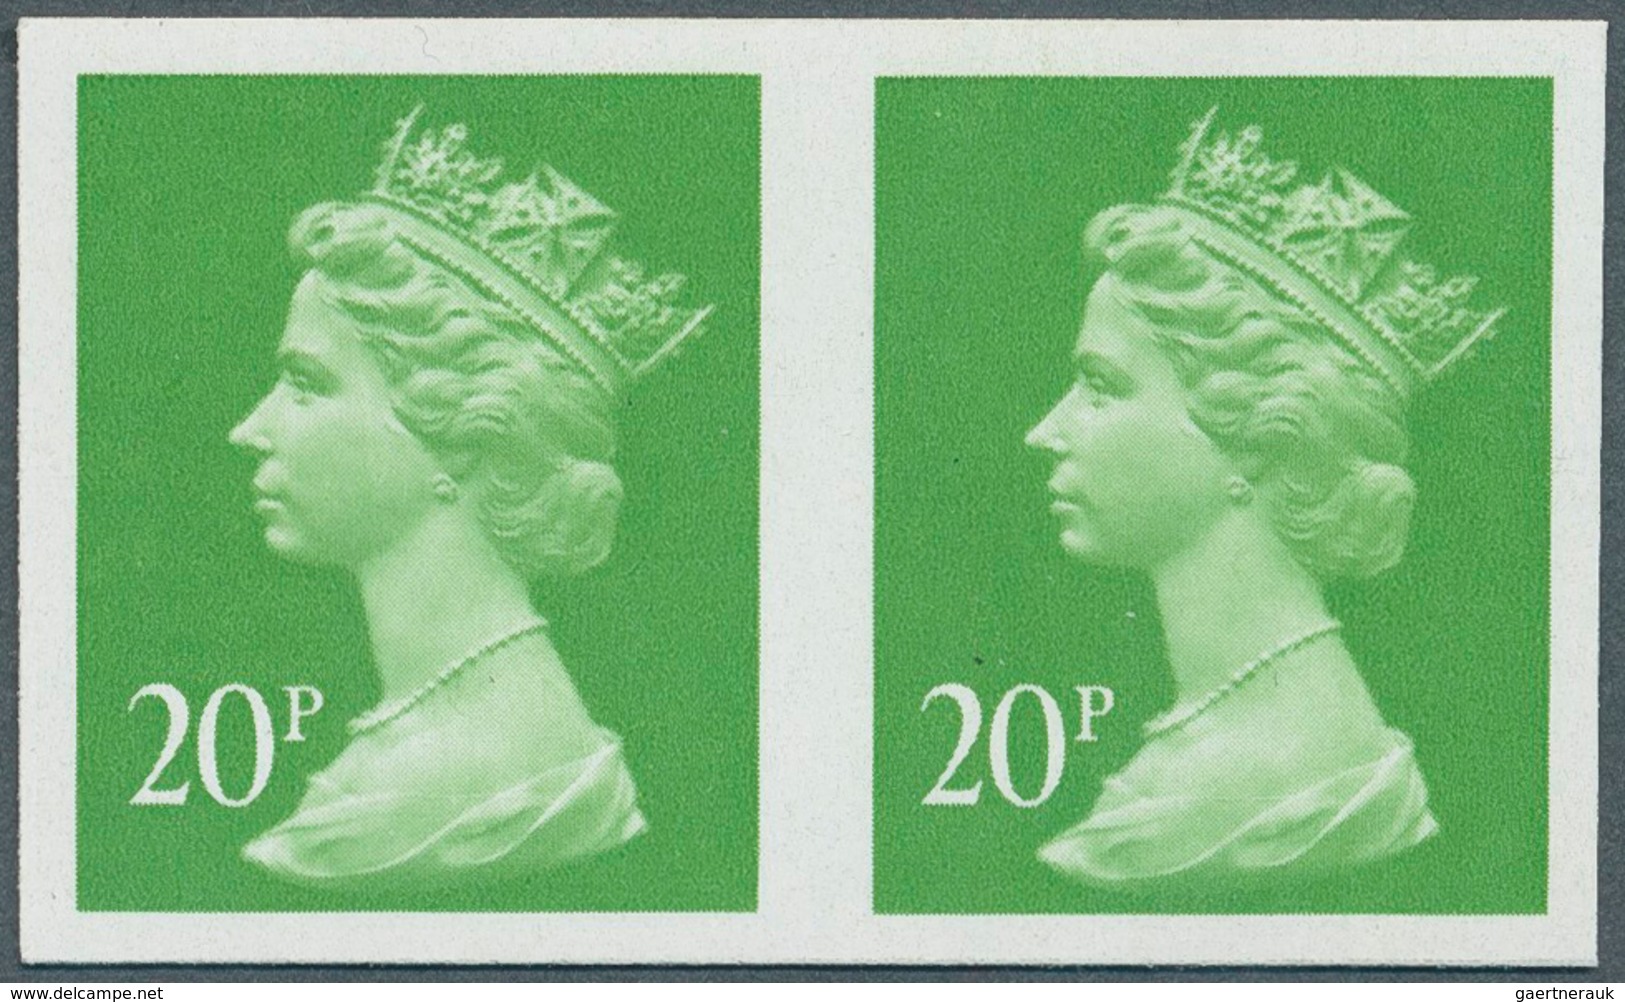 Großbritannien - Machin: 1996, 20 P. Bright Green, 1 Centre Band, Imperforated Pair, Unmounted Mint. - Série 'Machin'